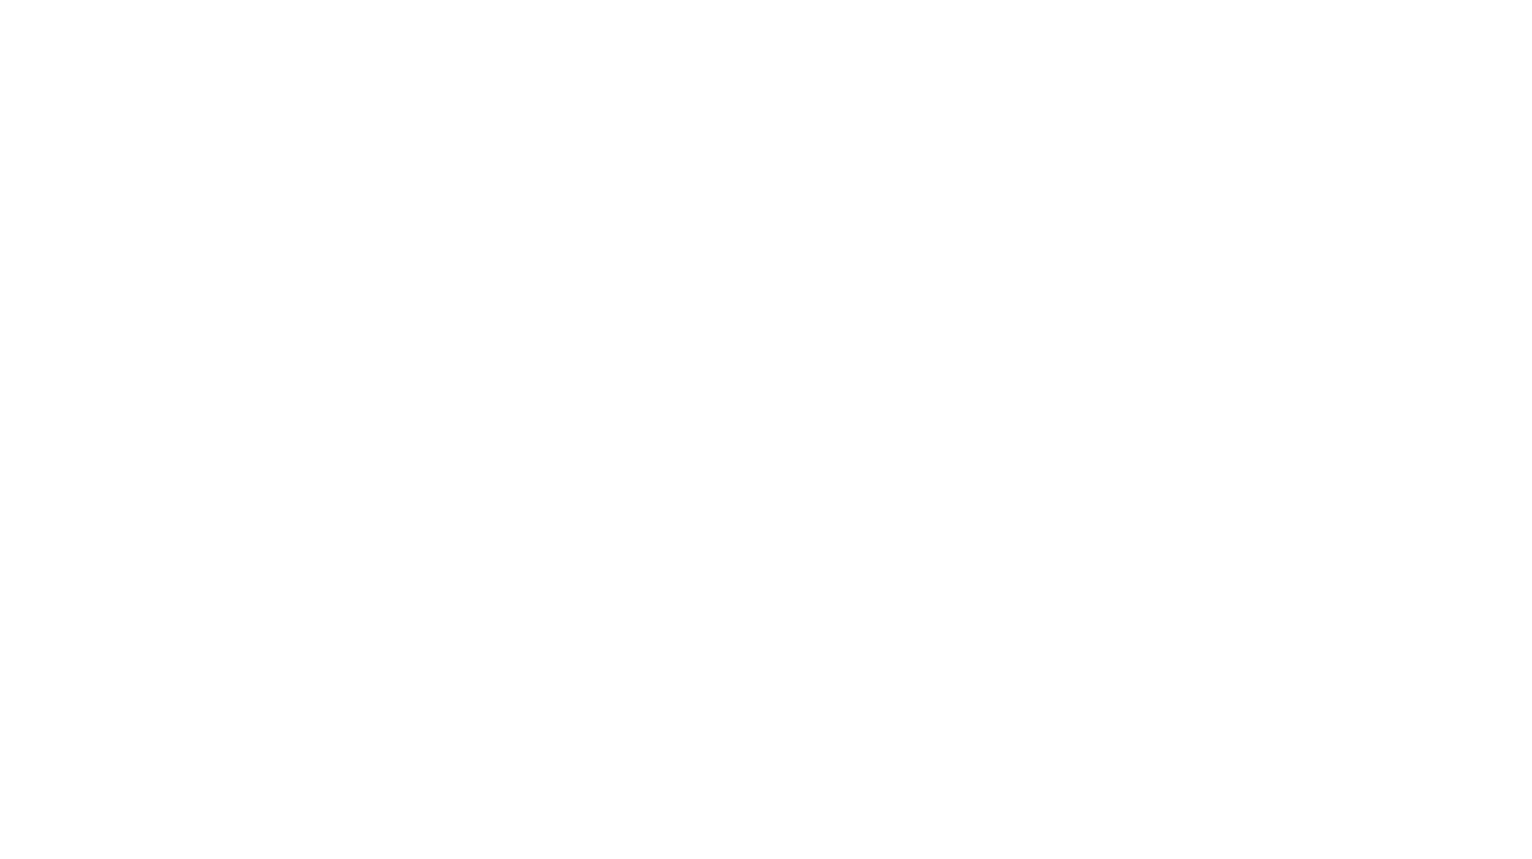 3R Petroleum Logo groß für dunkle Hintergründe (transparentes PNG)